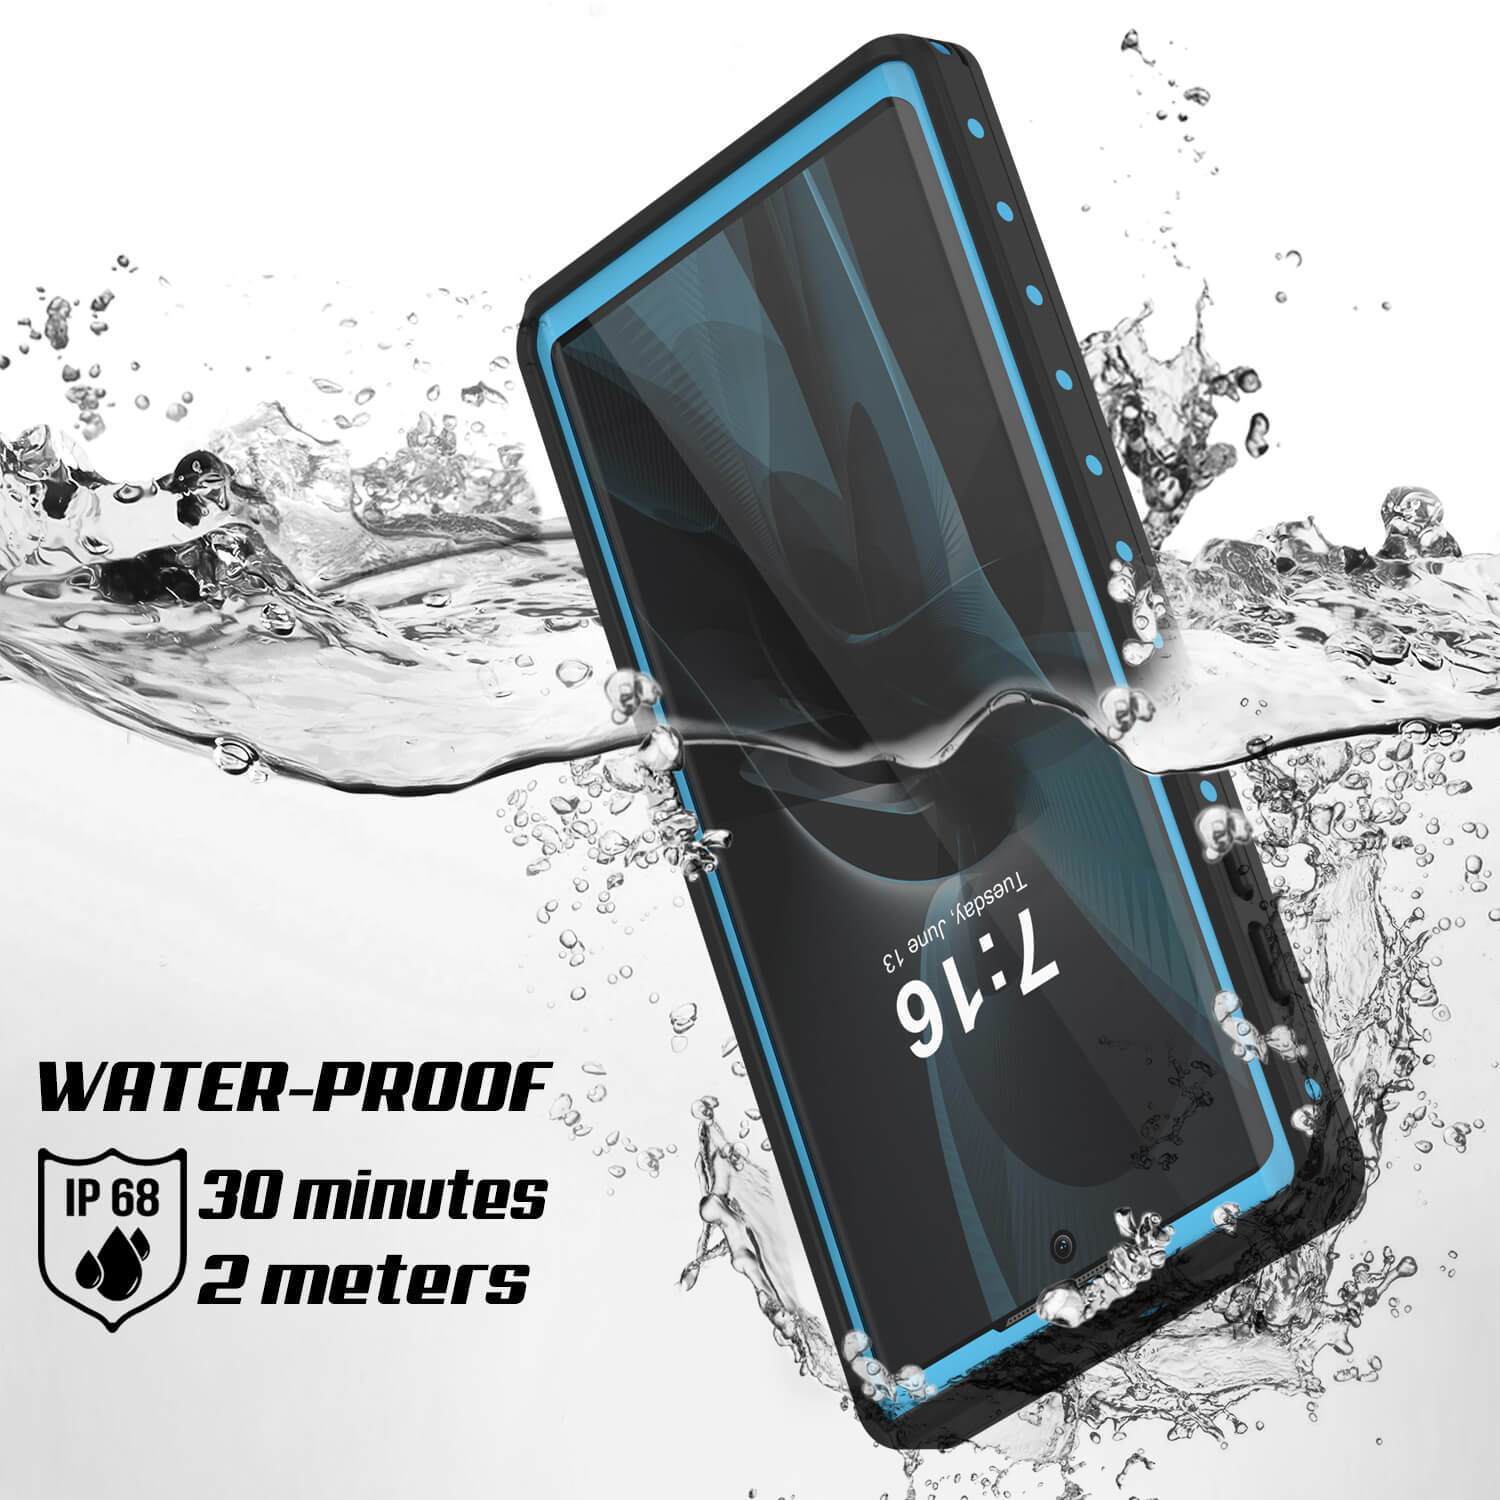 Galaxy Note 10+ Plus Waterproof Case, Punkcase Studstar Light Blue Thin Armor Cover